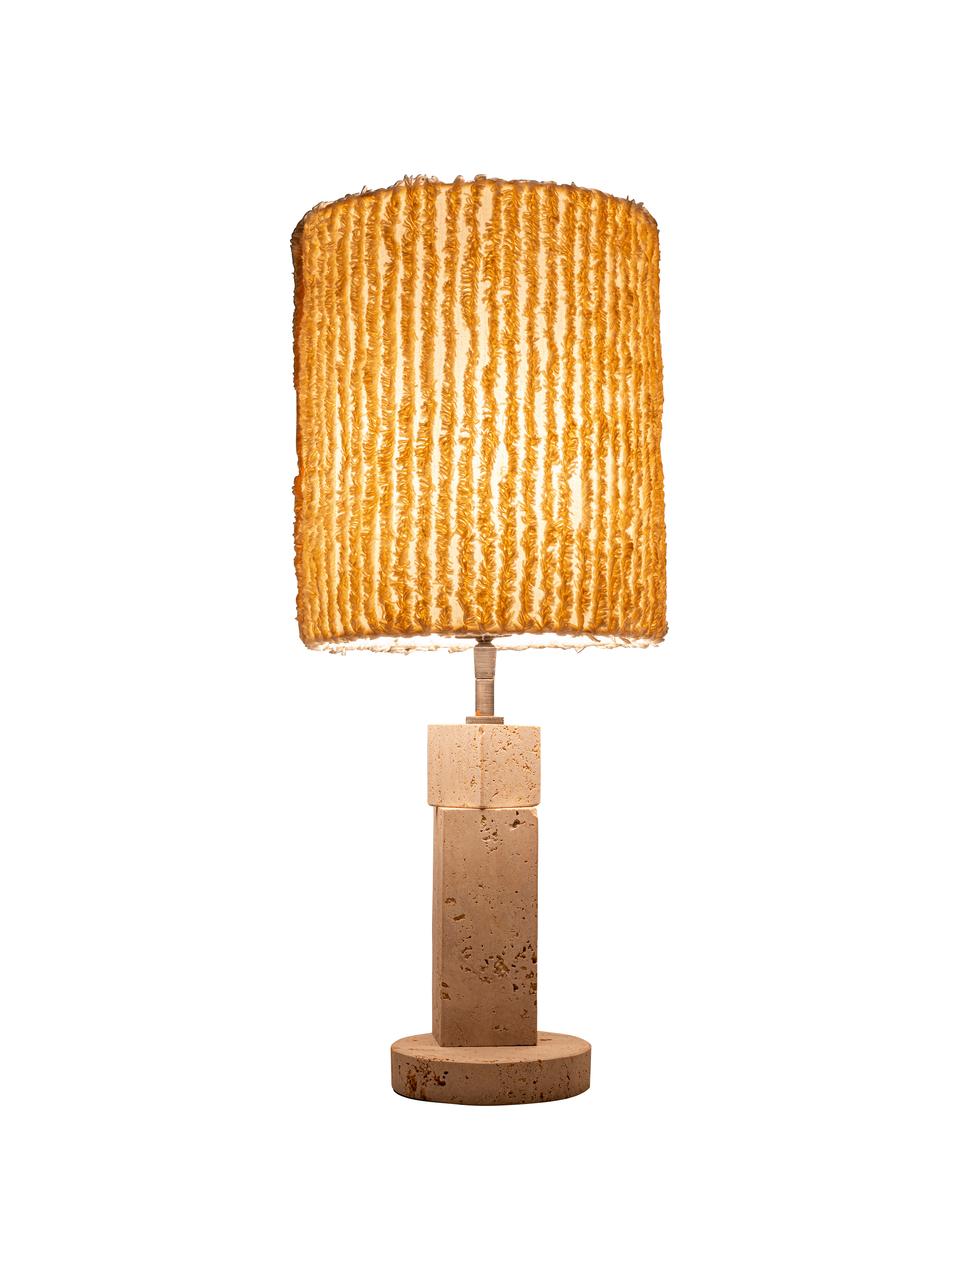 Grand lampe à poser Lipsi, Blanc crème, travertin beige clair, Ø 24 x haut. 58 cm